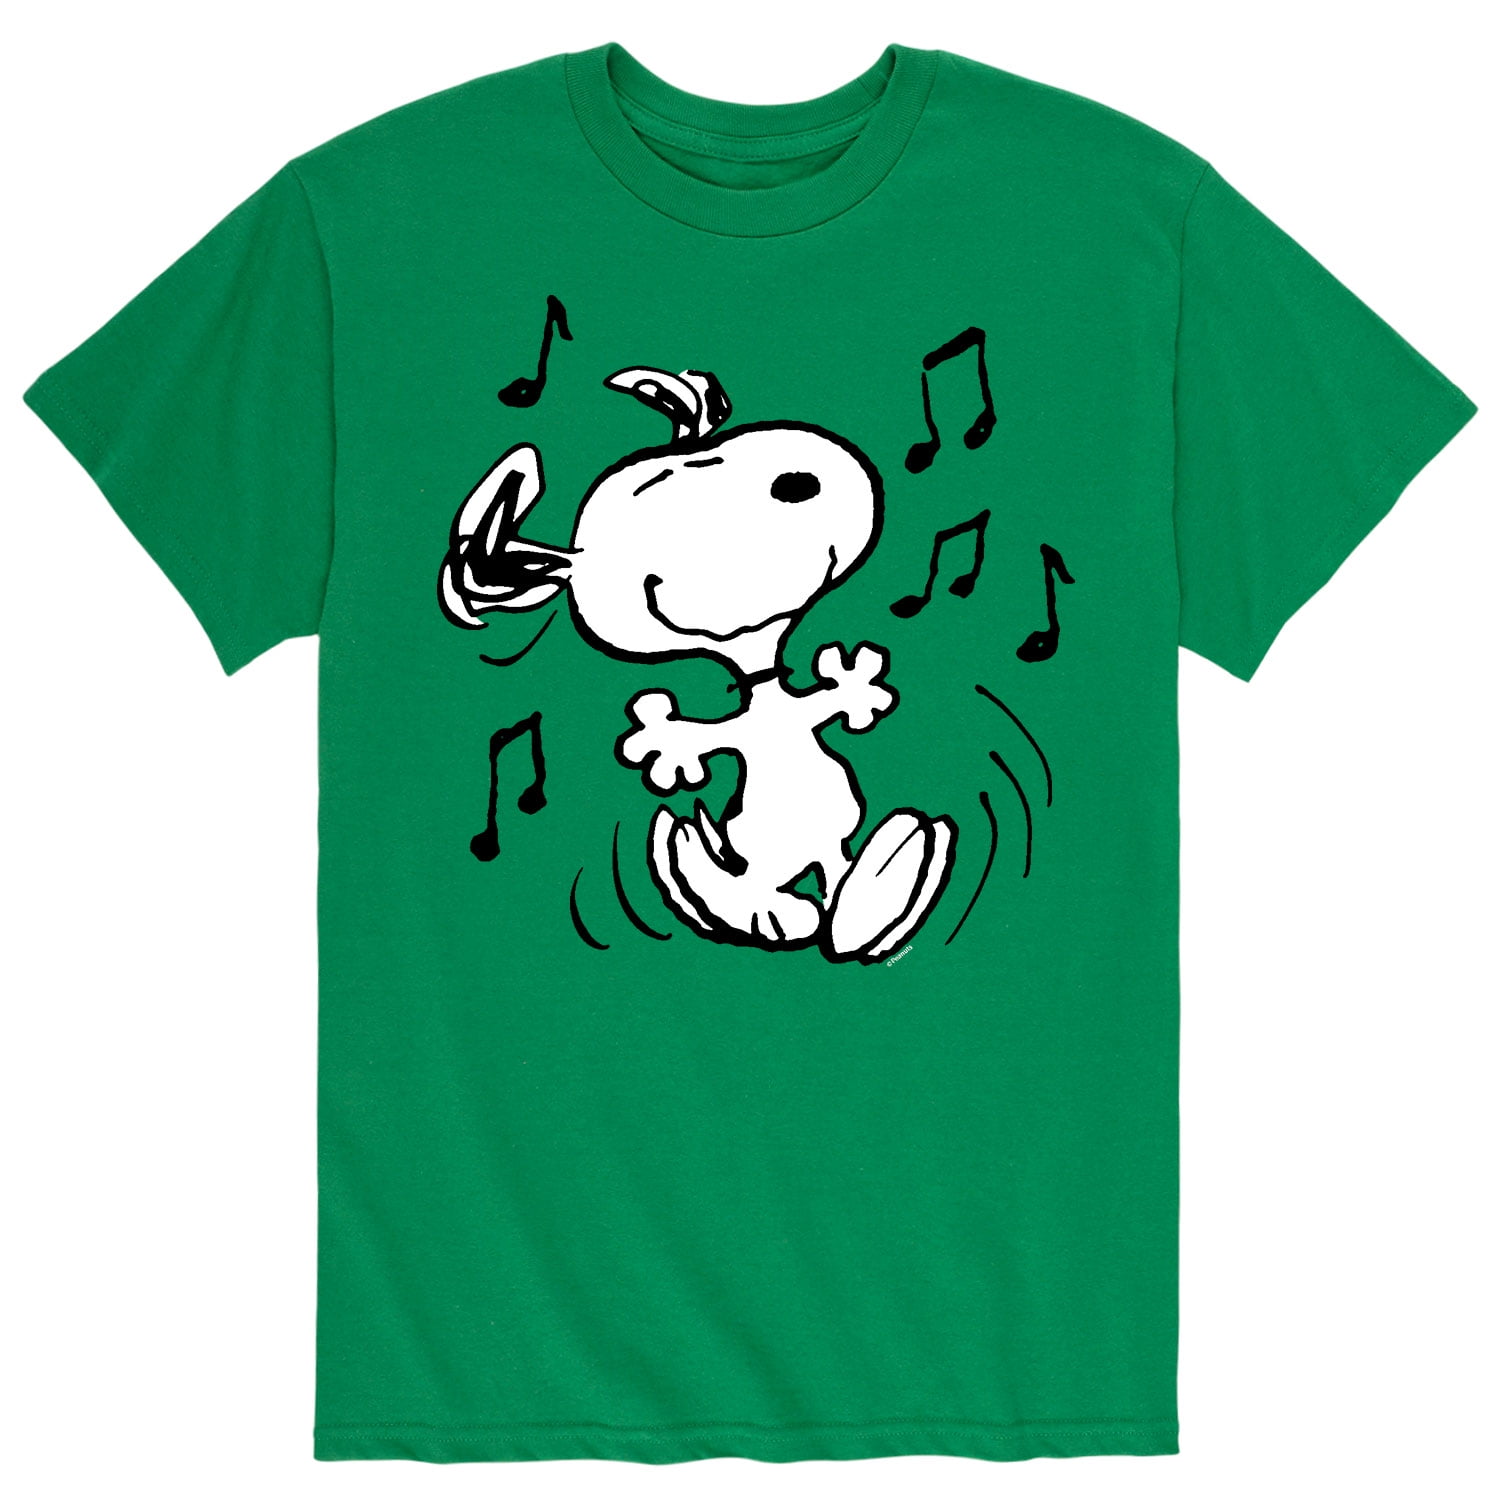 Peanuts - Snoopy Dancing - Men's Short Sleeve Graphic T-Shirt